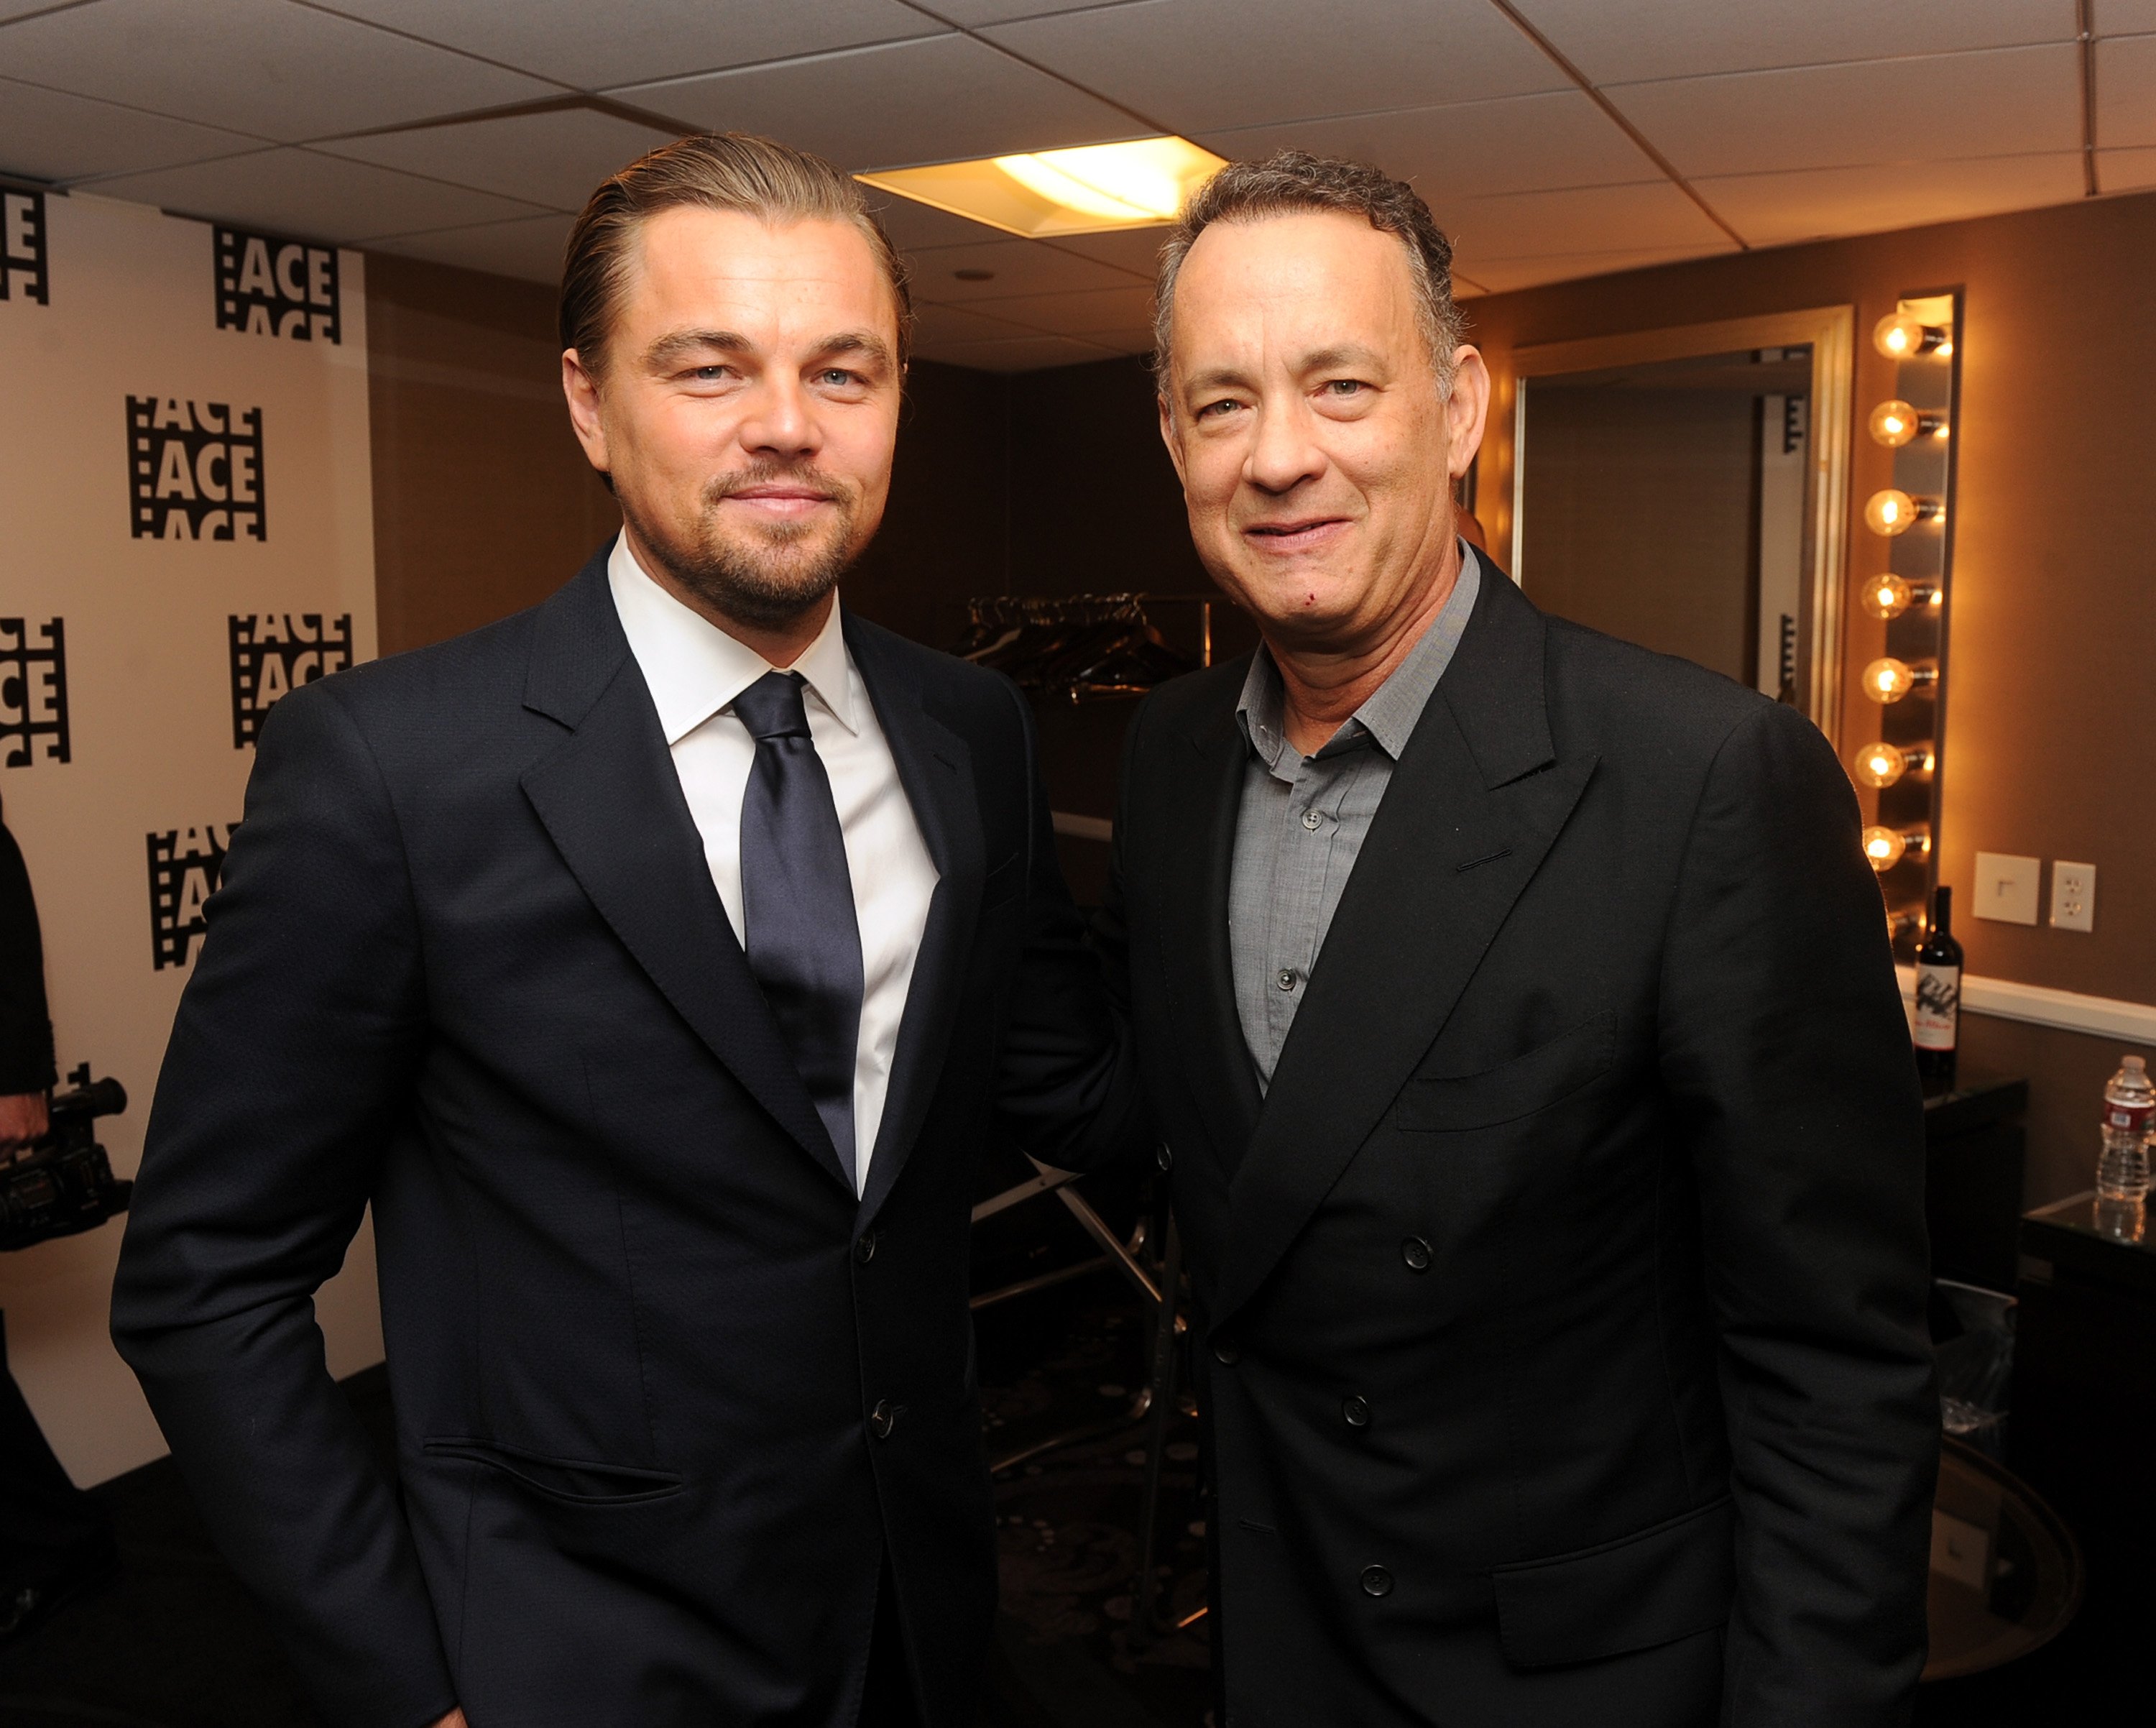 Tom Hanks and Leonardo DiCaprio meet in the Ace Eddie Awards green room